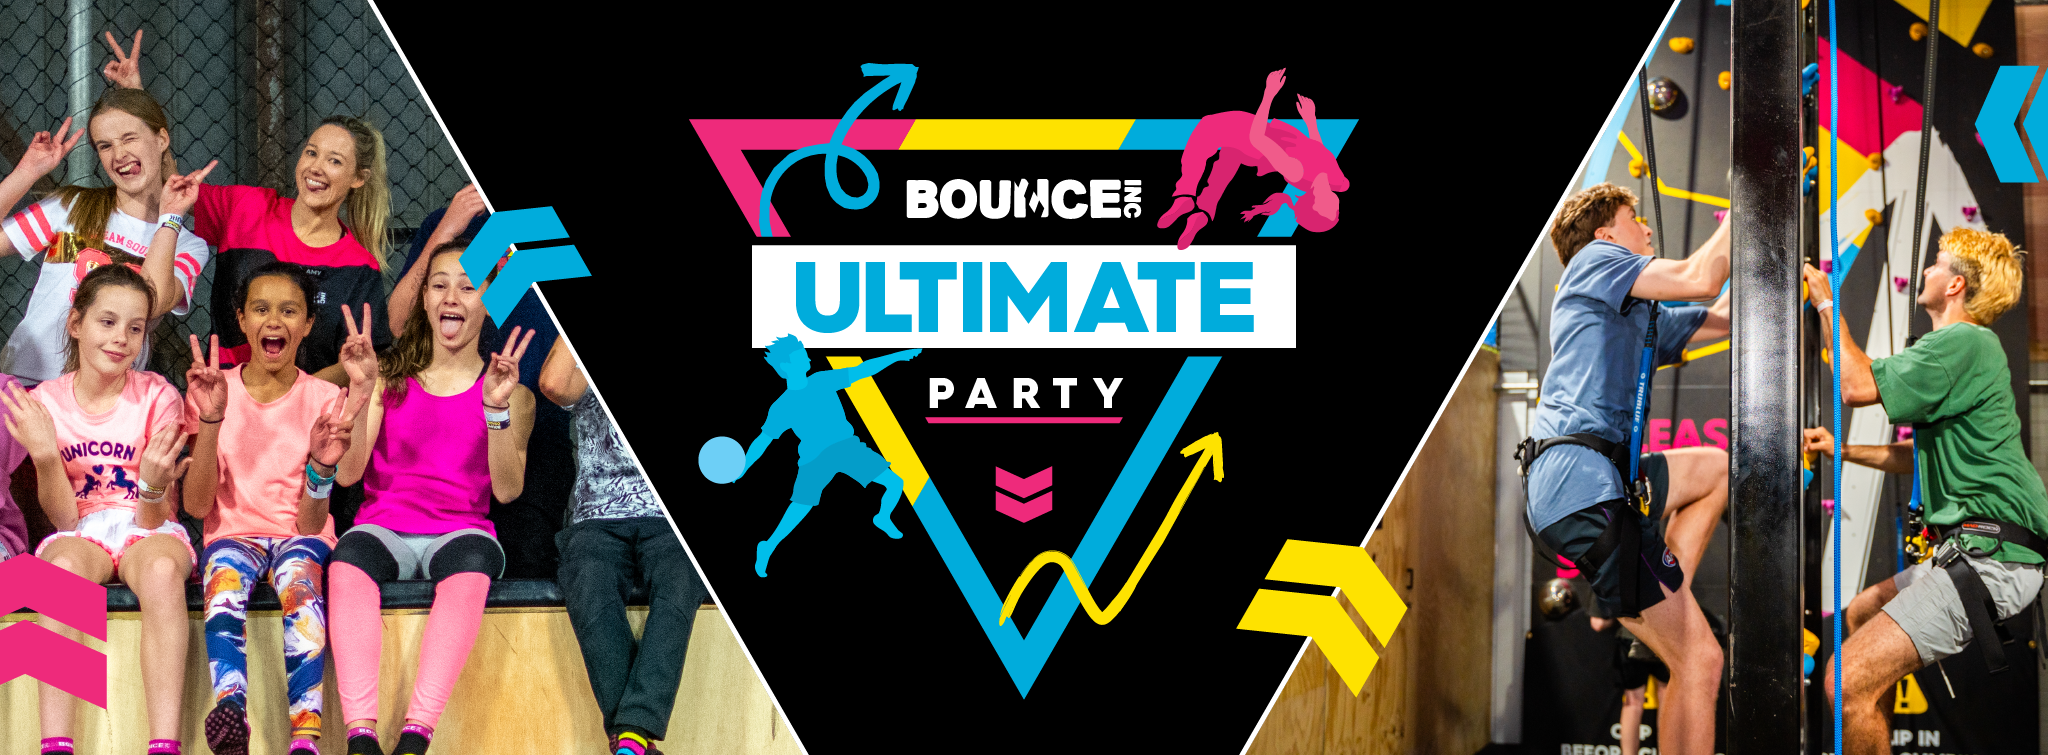 Ultimate Parties - Bounce Australia